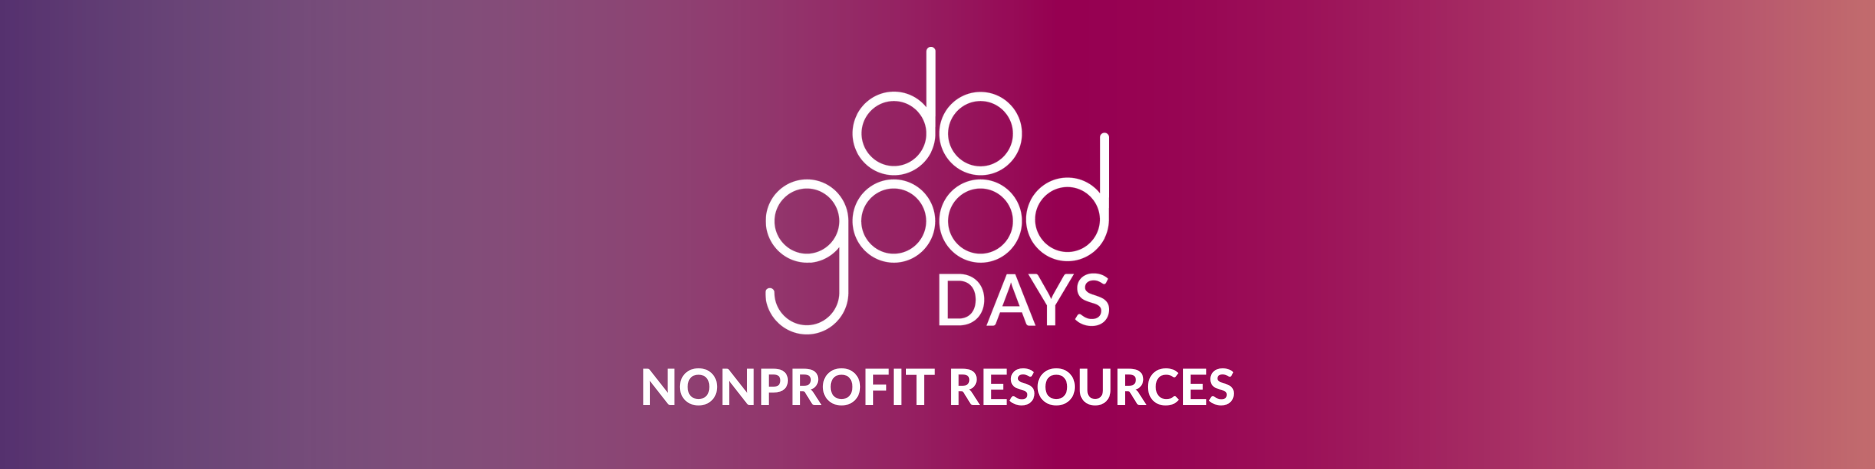 Do Good Days Nonprofit Resources